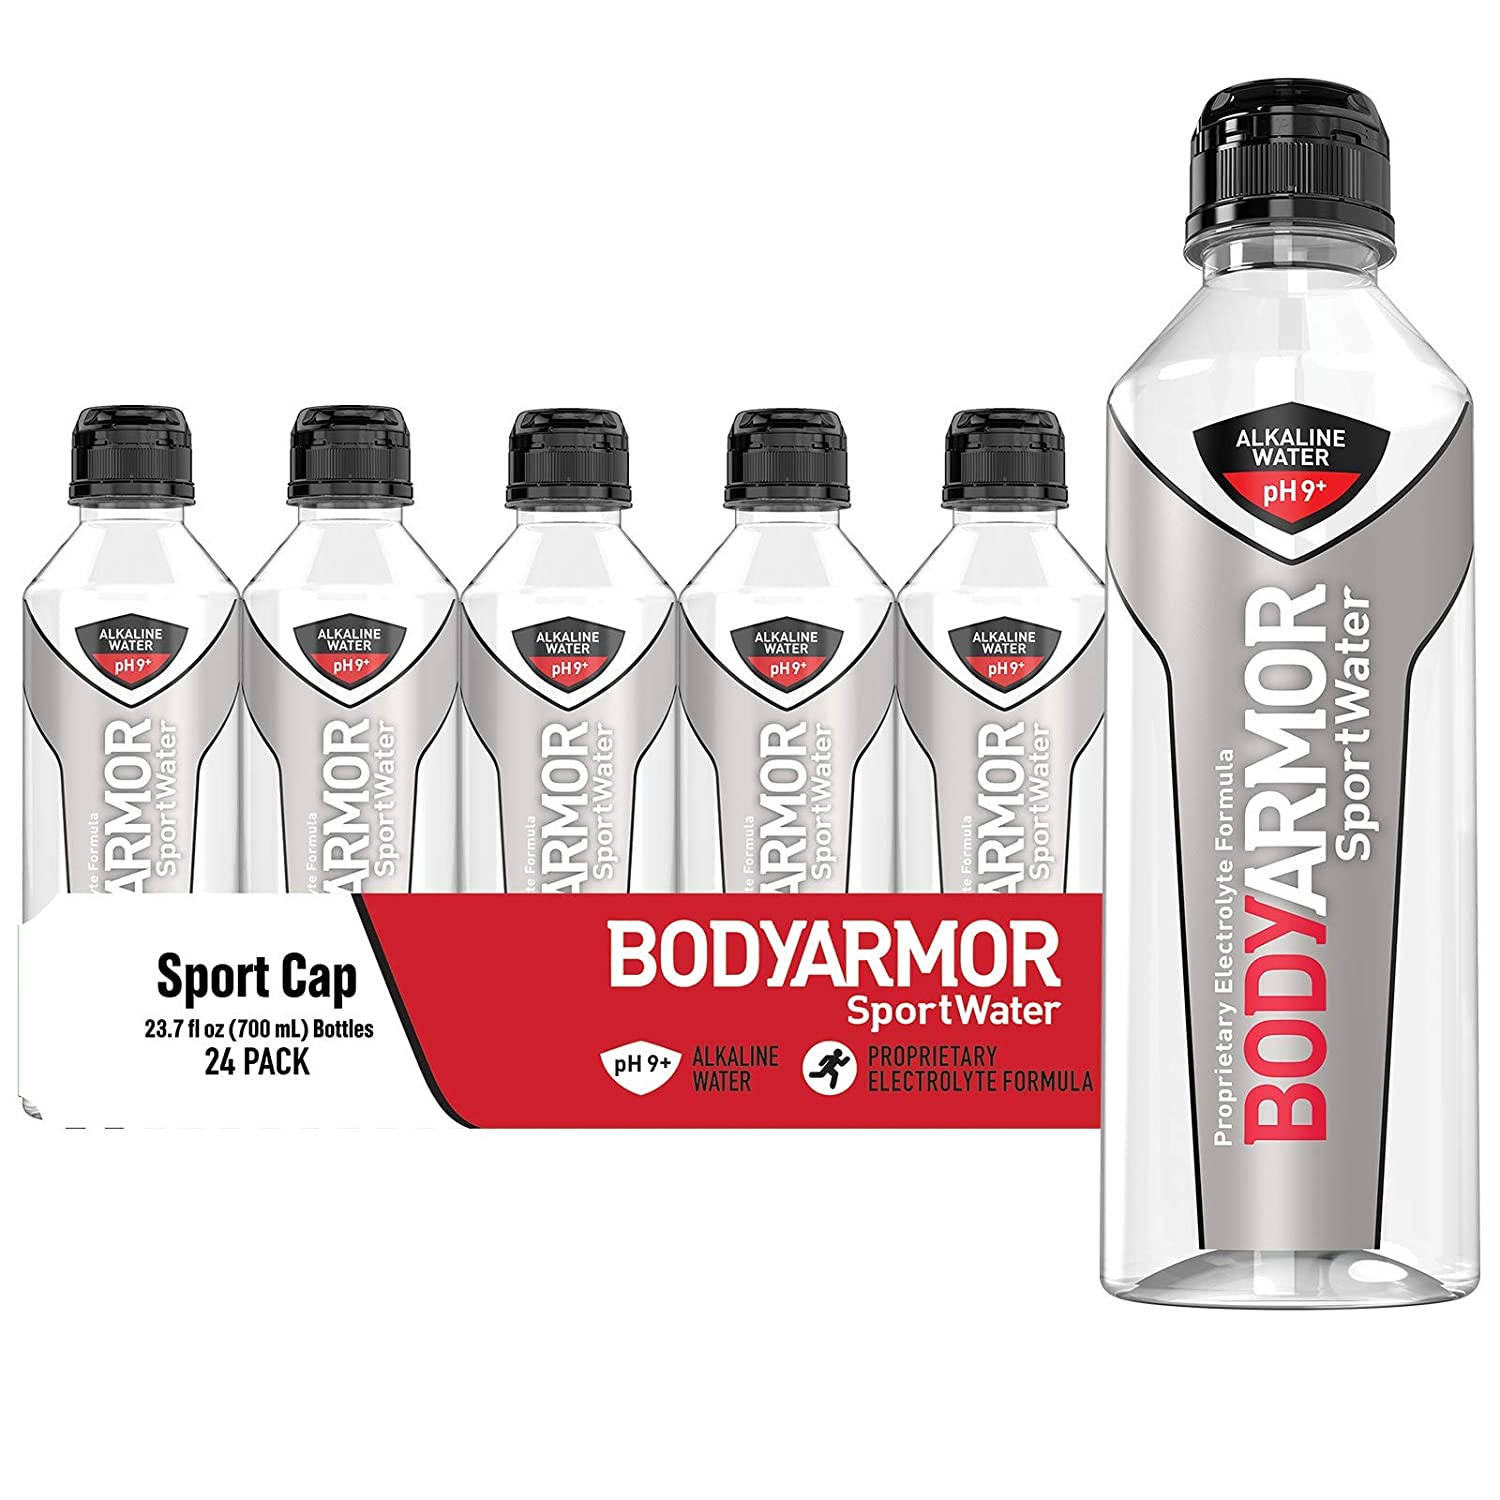 BodyArmor water bottle